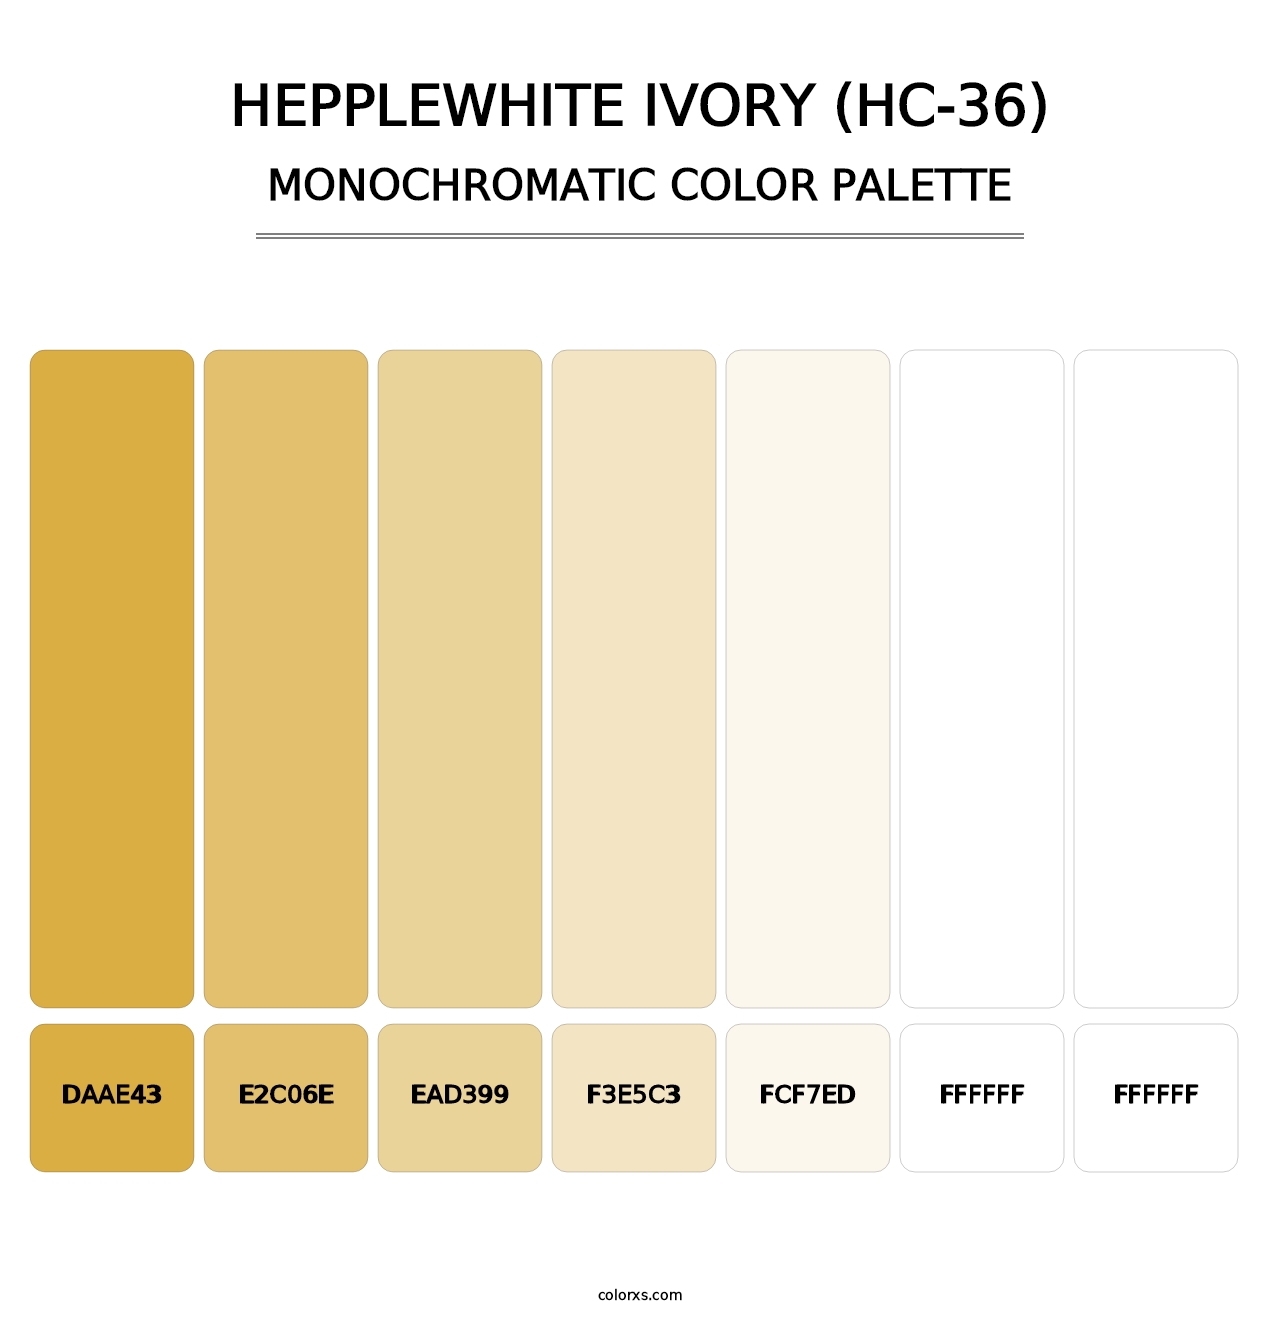 Hepplewhite Ivory (HC-36) - Monochromatic Color Palette